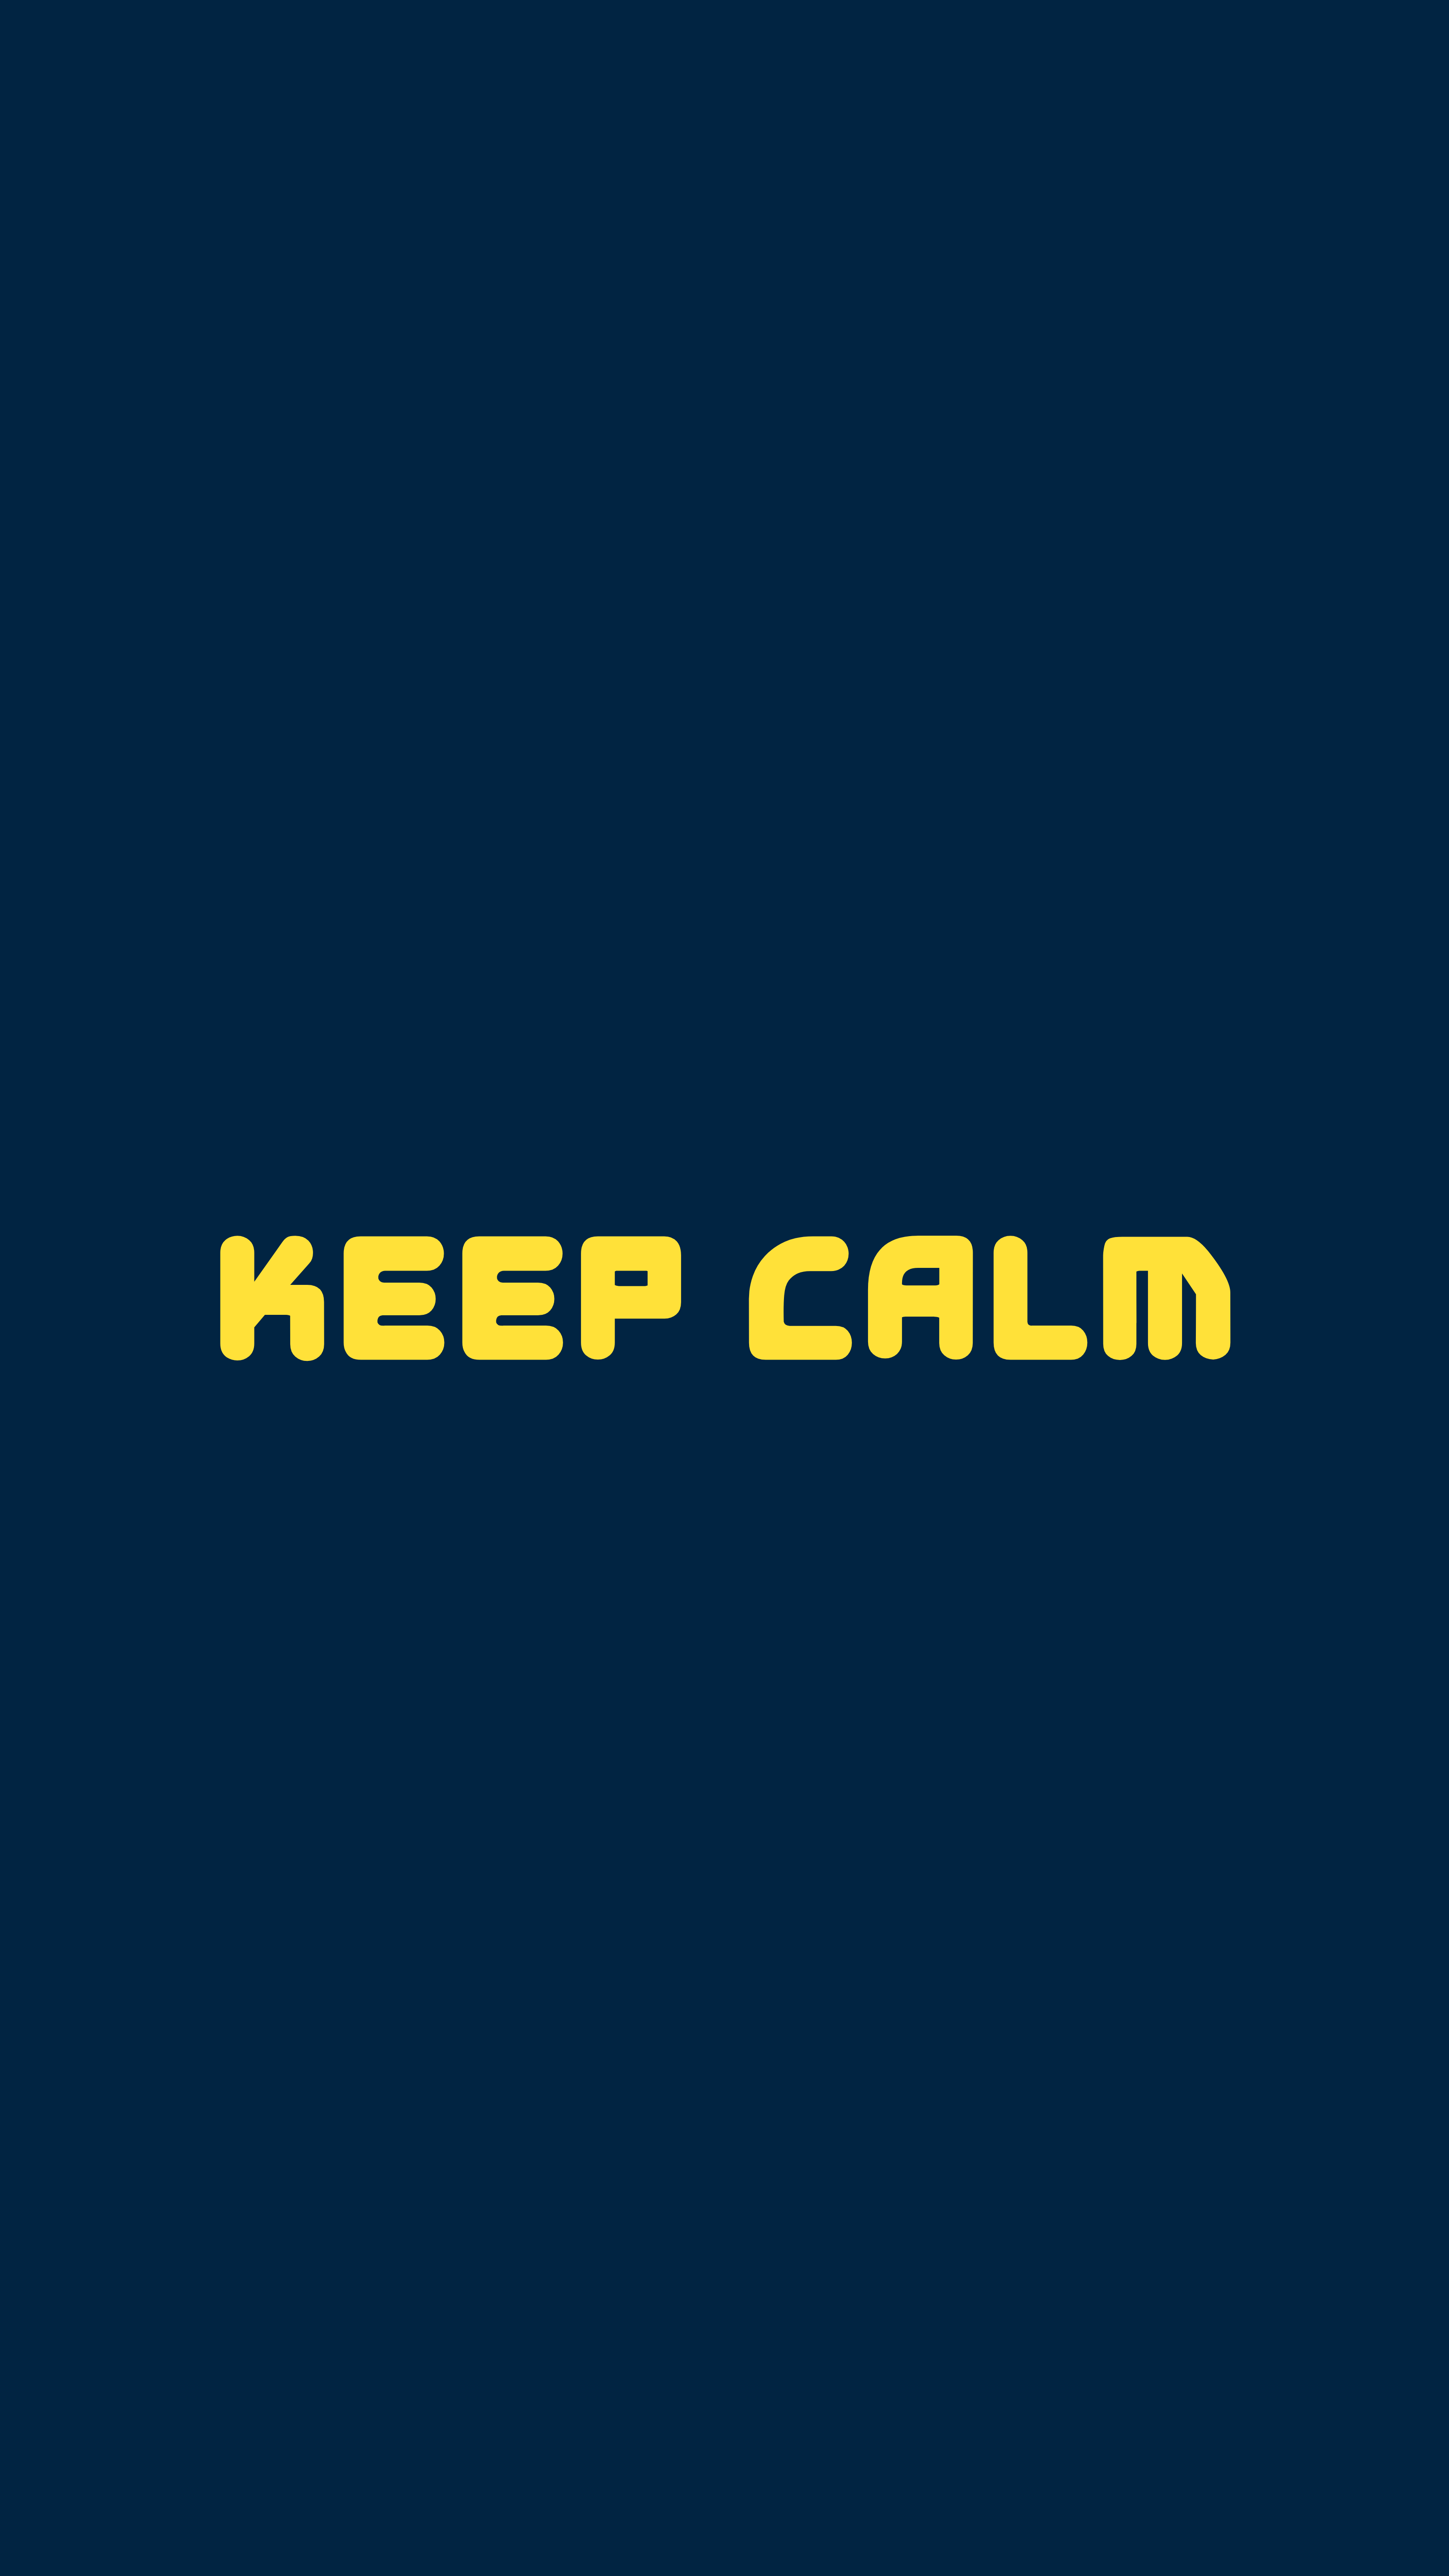 keep calm, calmness, words, motivation Lock Screen Images